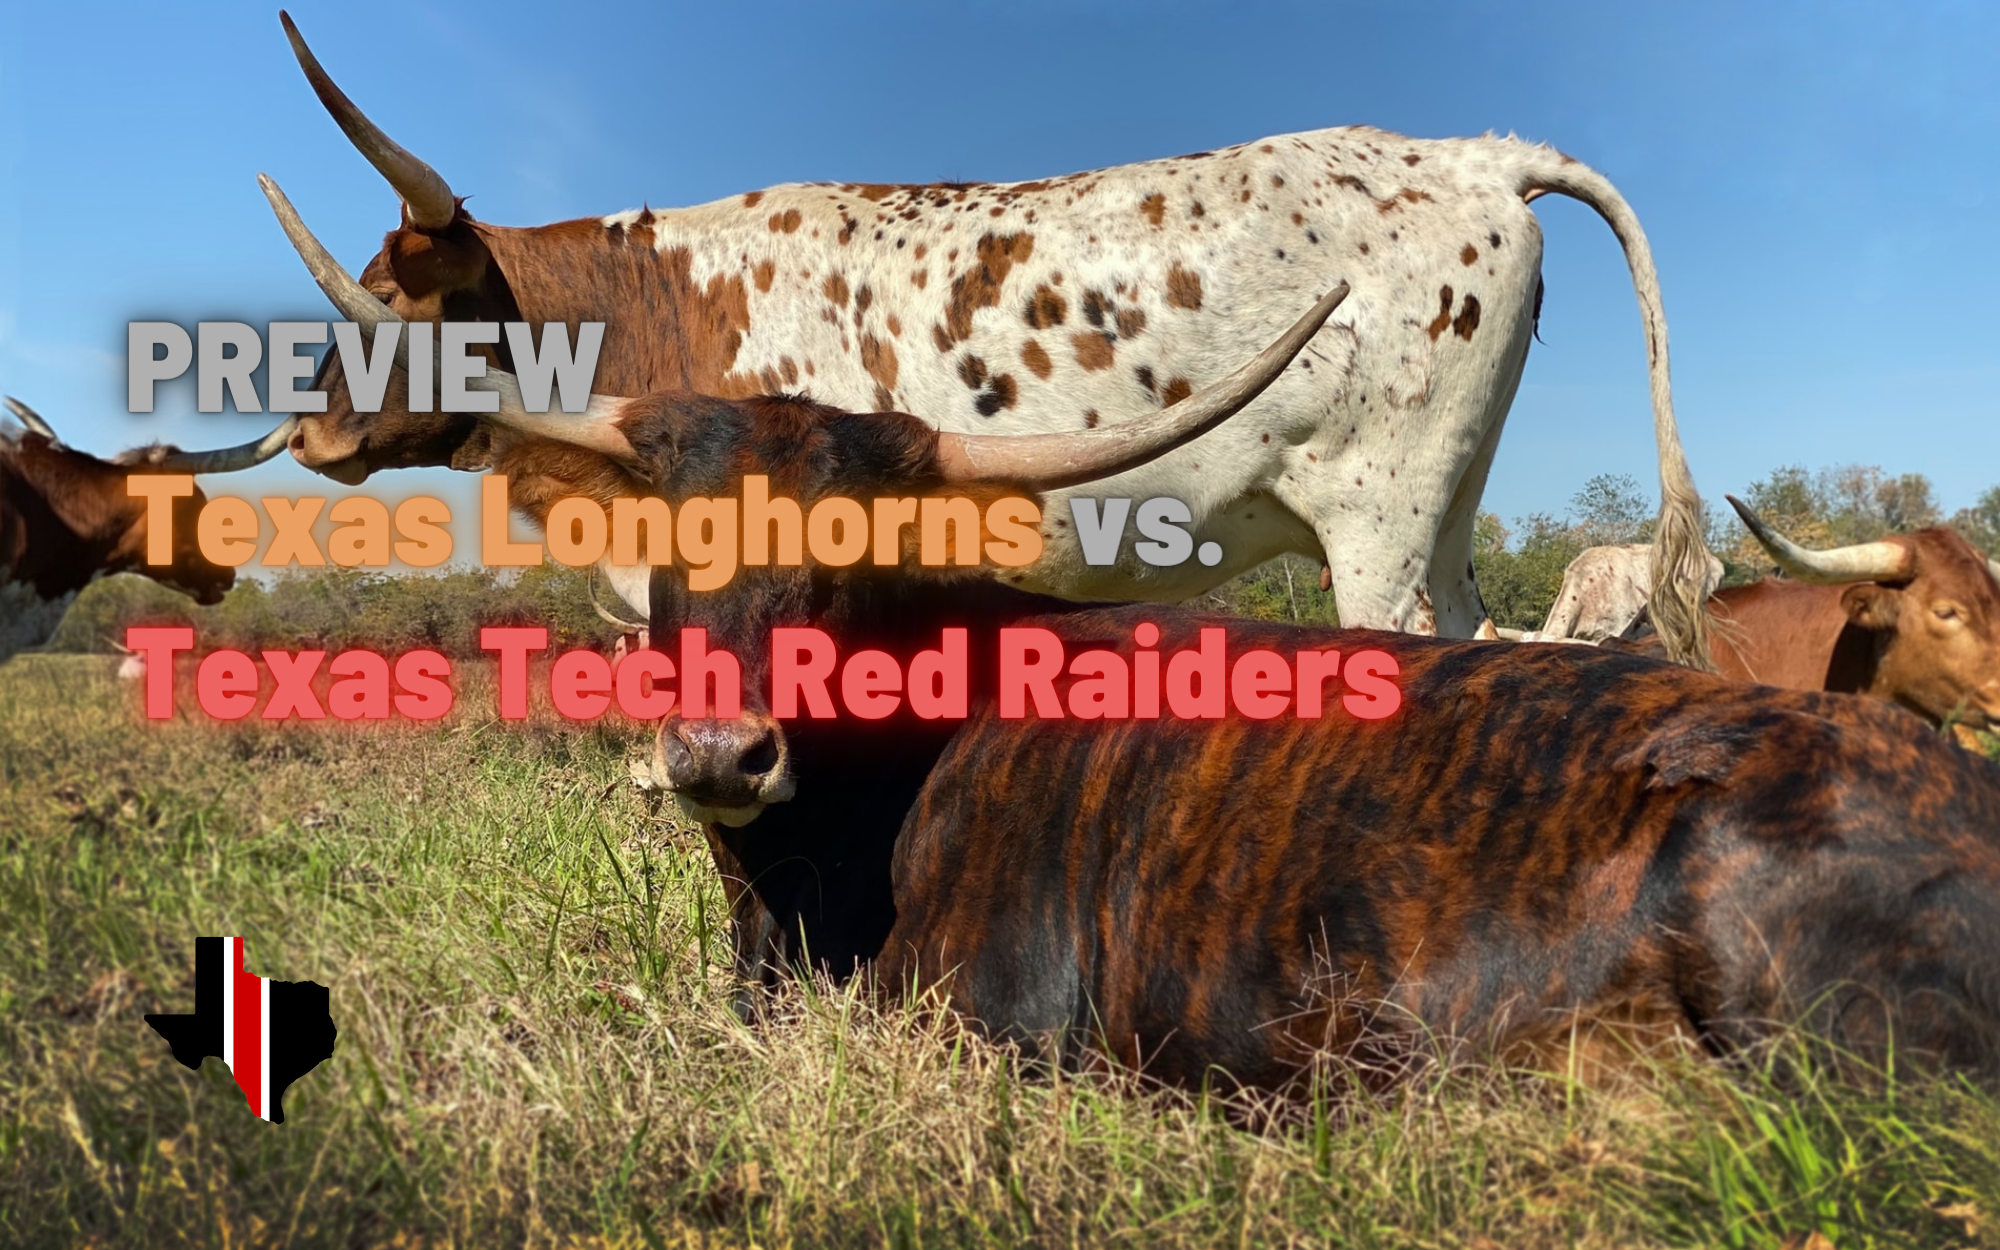 Preview: Texas Longhorns vs. Texas Tech Red Raiders